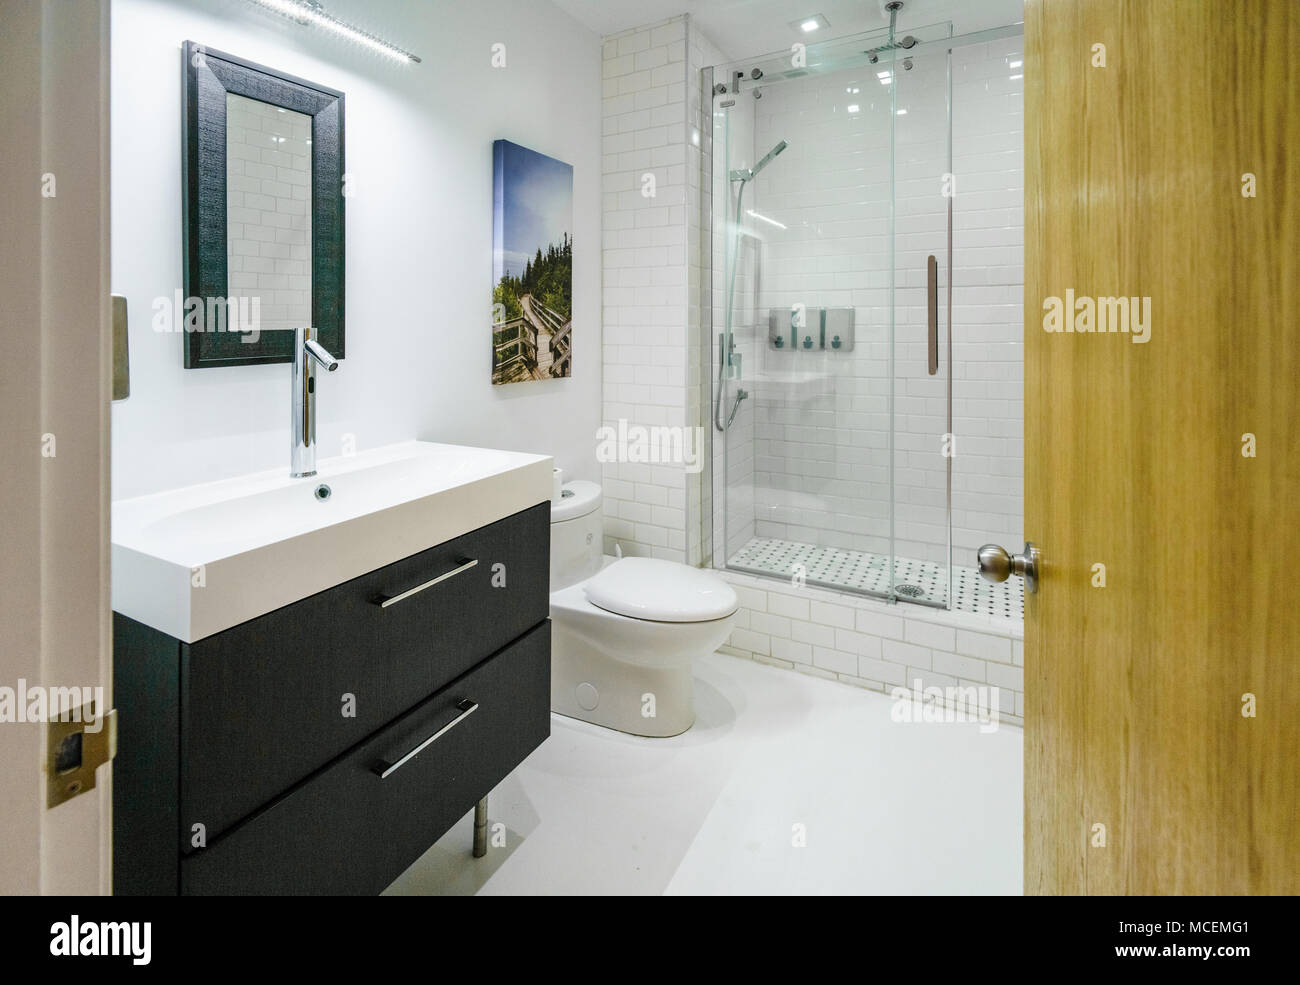 Interior of modern luxury bathroom Stock Photo